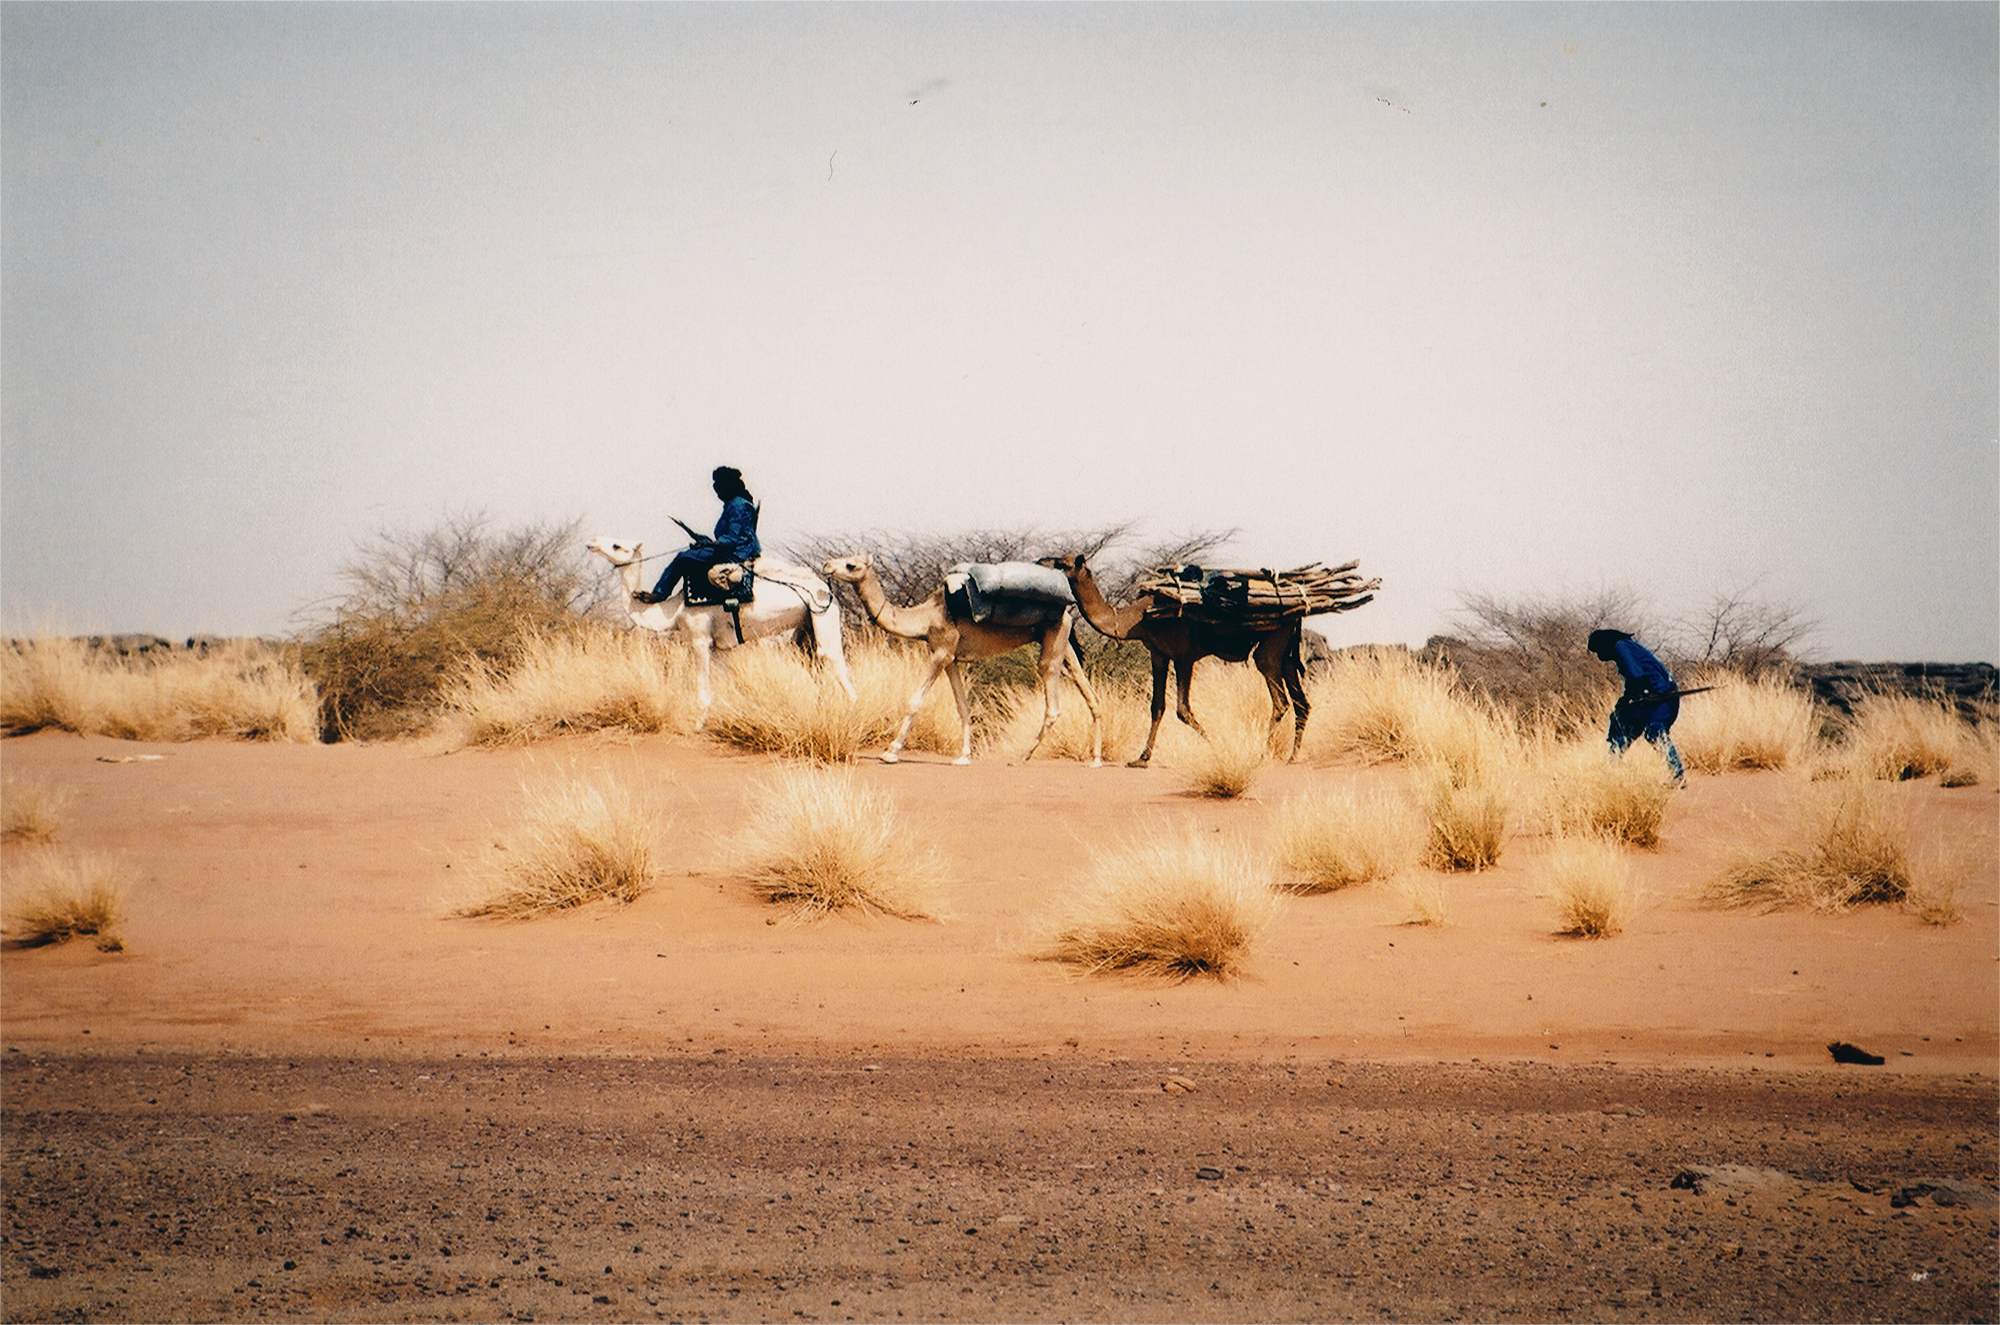 The Tuareg the Nomadic inhabitants of North Africa